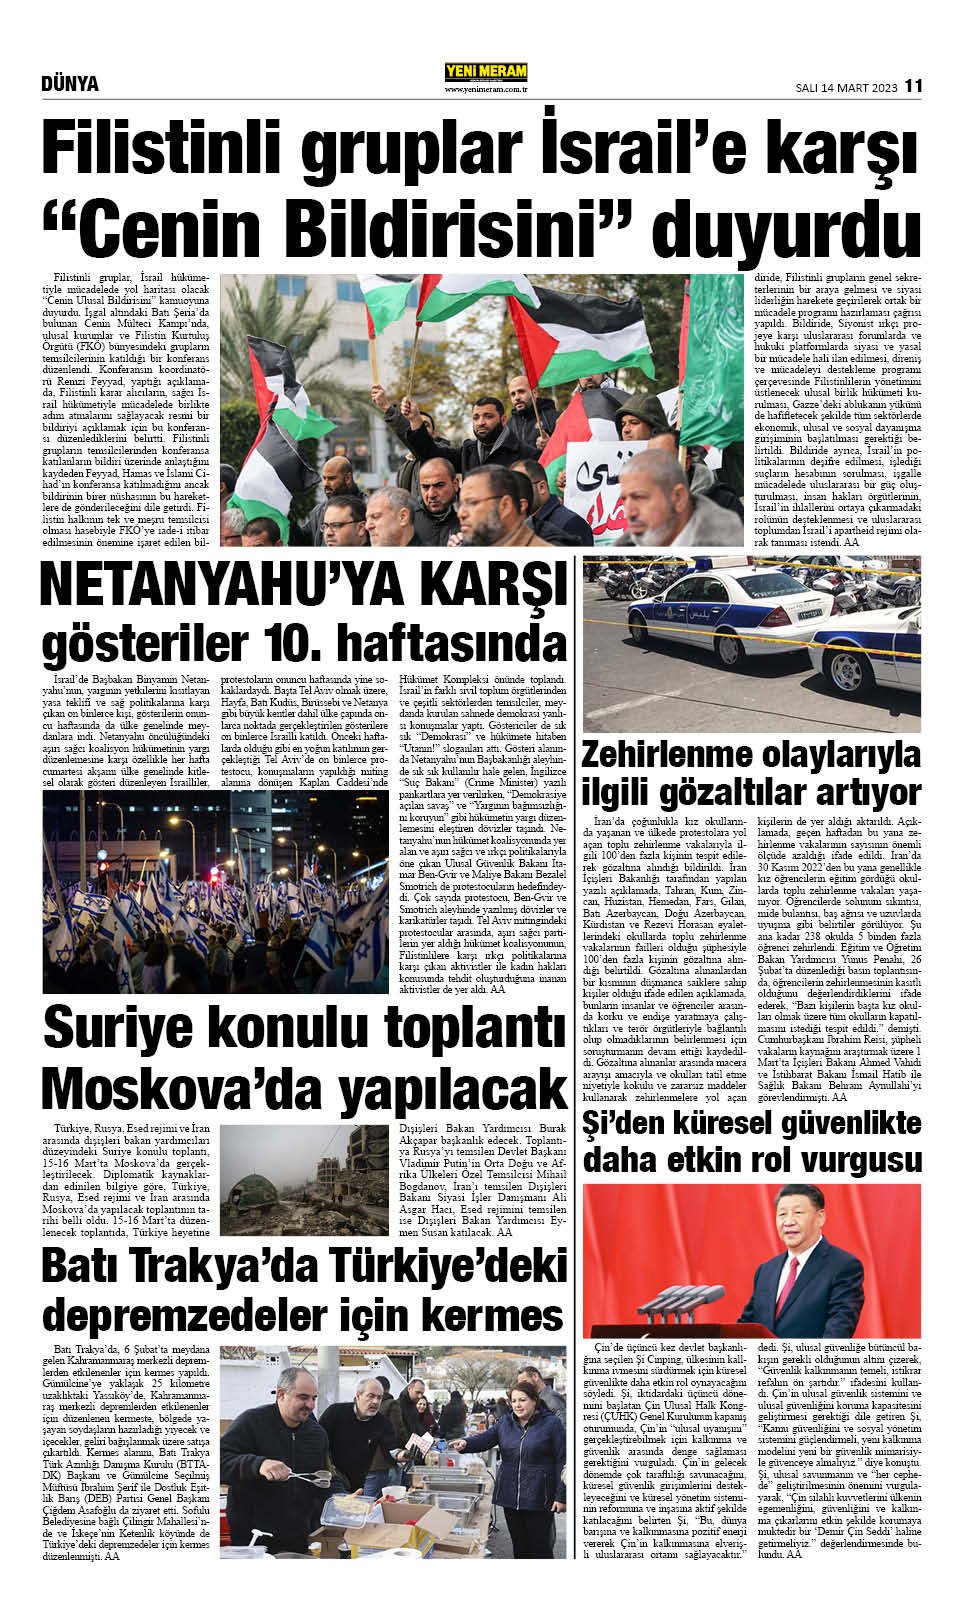 14 Mart 2023 Yeni Meram Gazetesi
